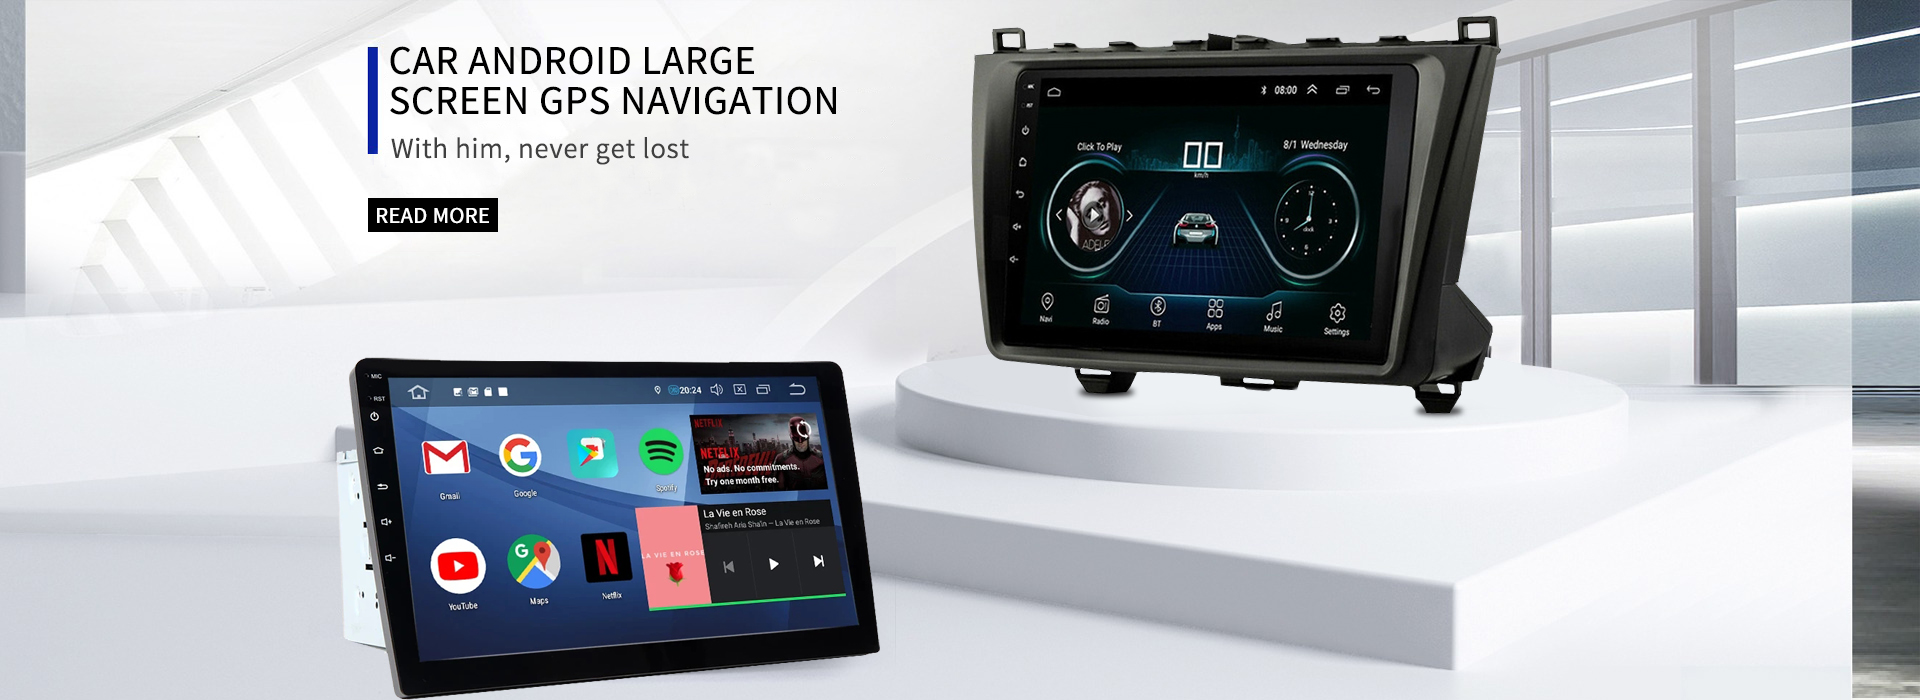 Auto Android Großbild-GPS-Navigation